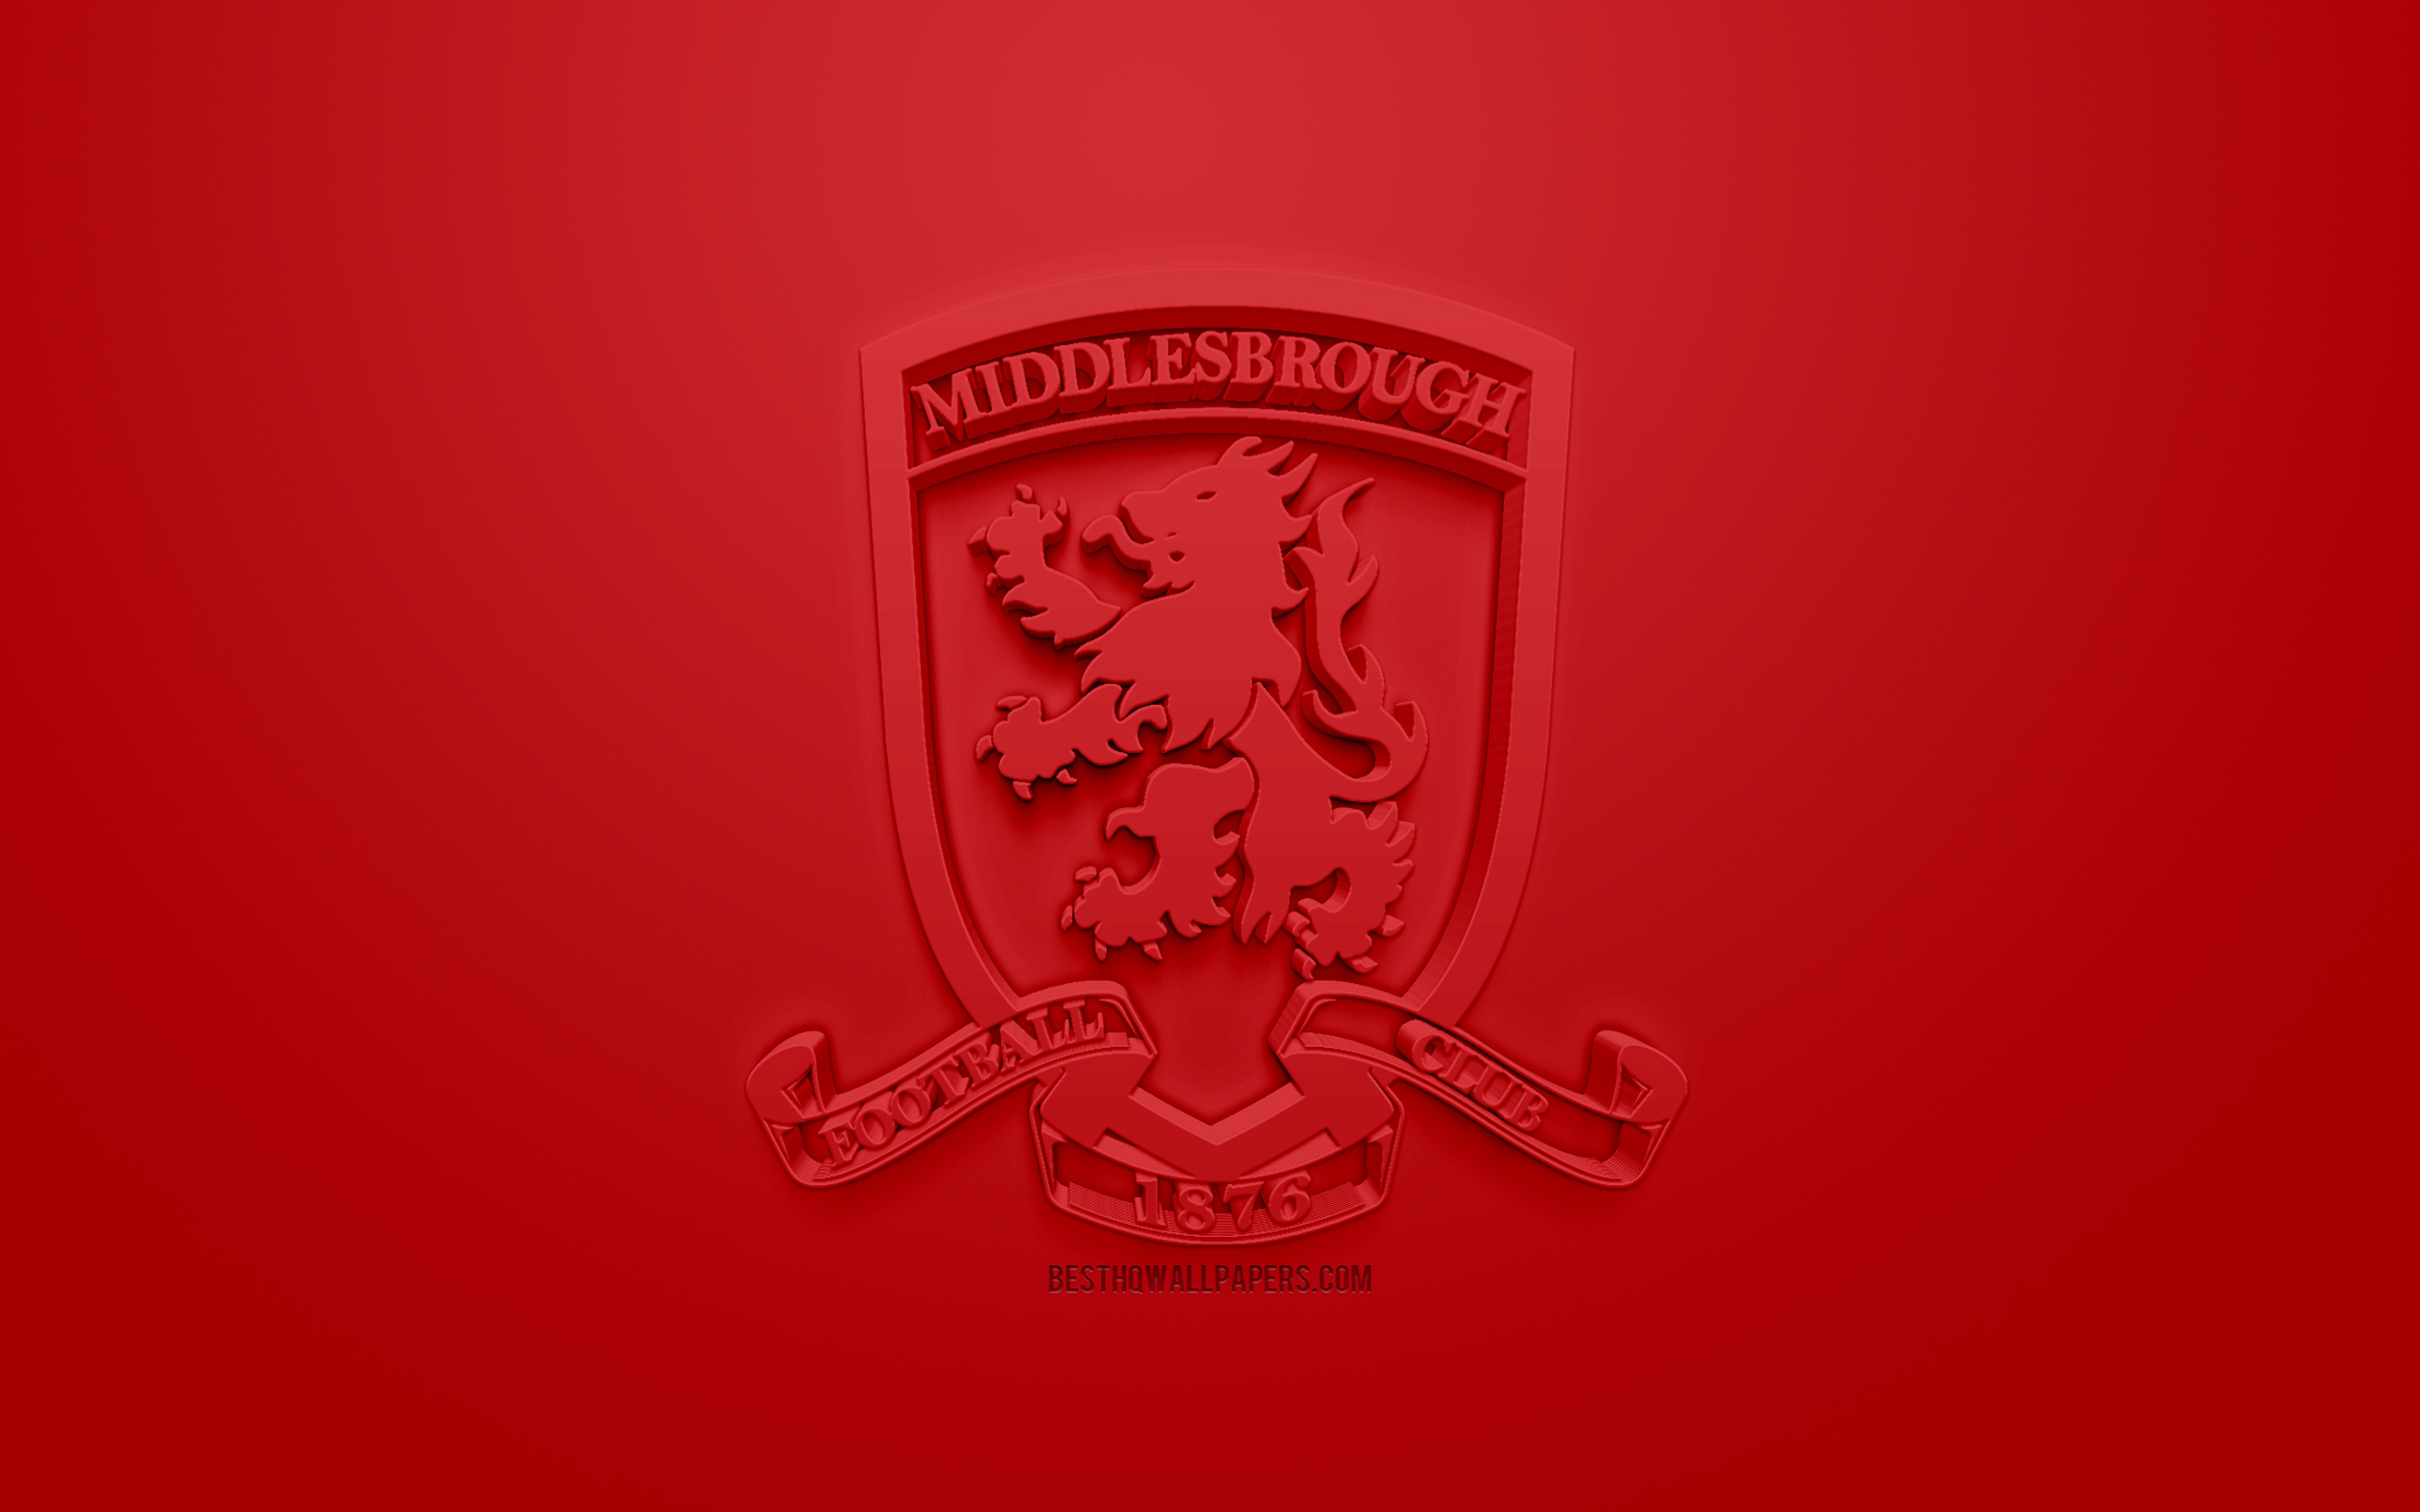 Middlesbrough FC (Away) | Stephen Clark (sgclark.com)